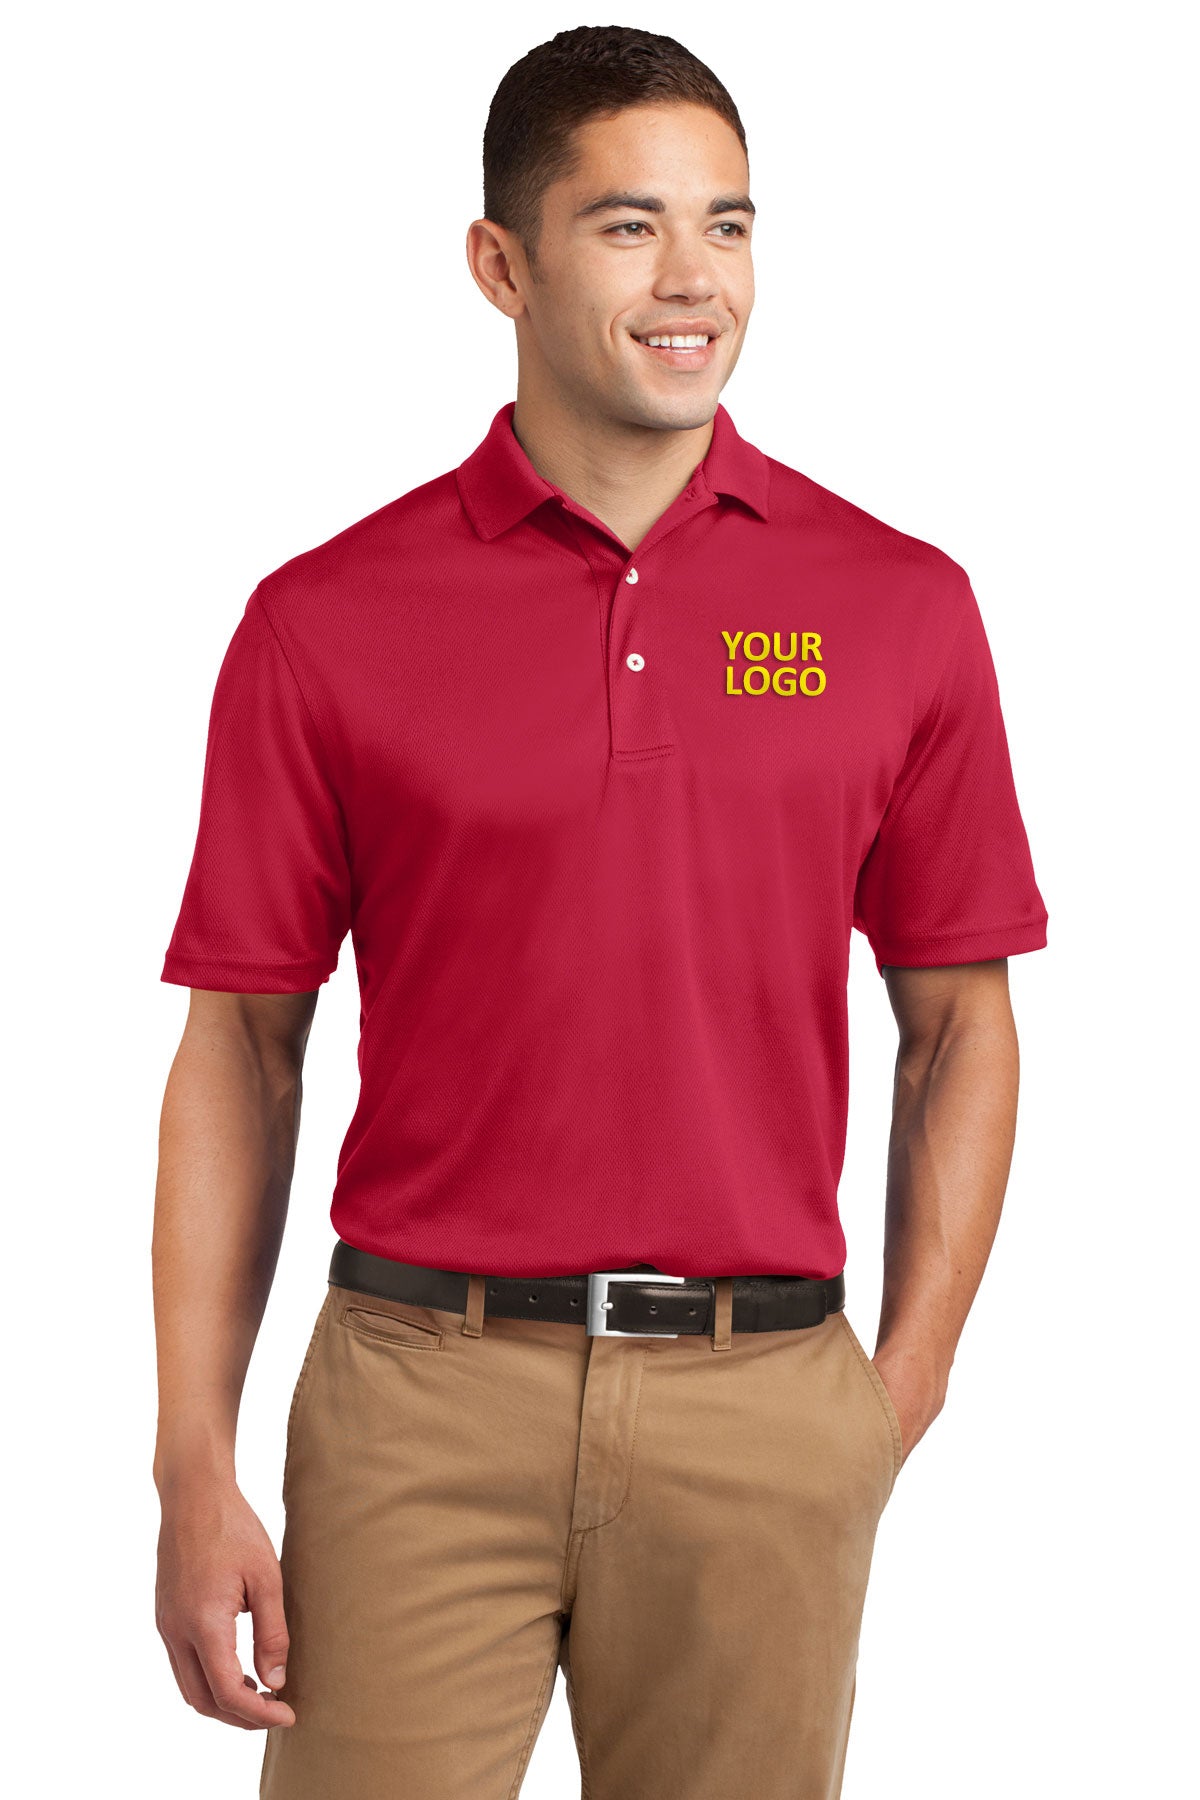 Sport-Tek Red TK469 quality polo shirts with company logo